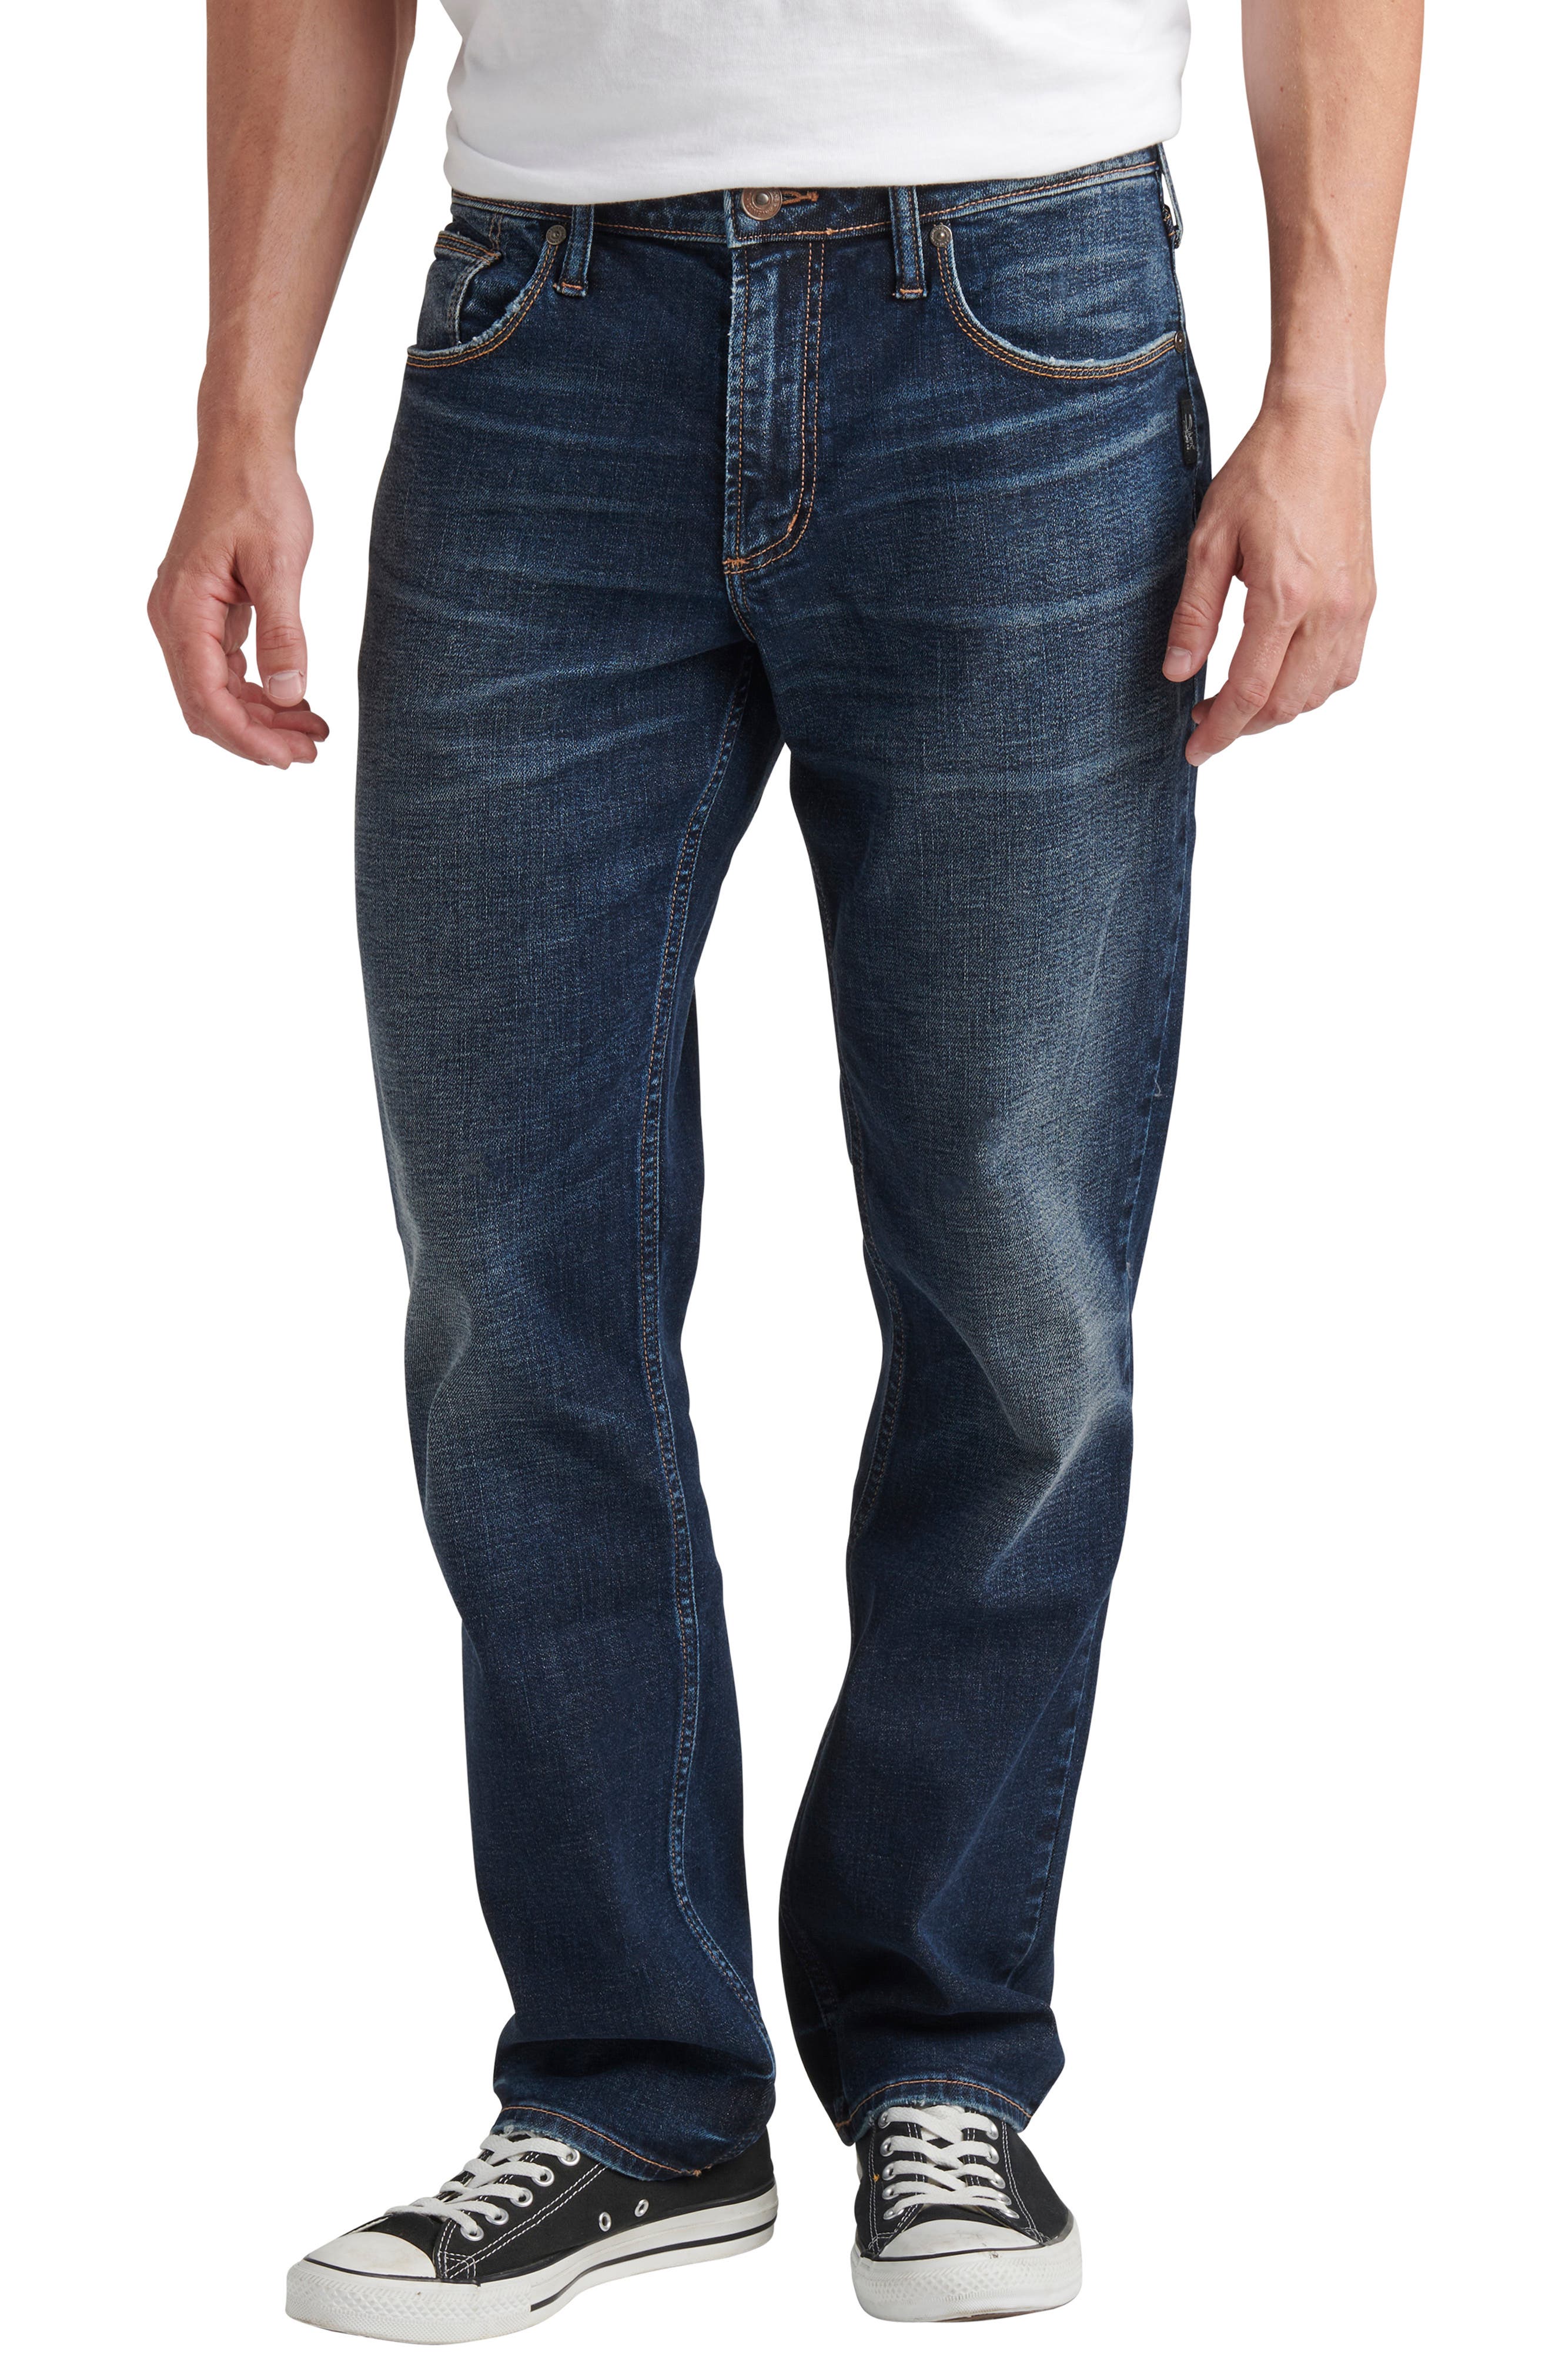 Men's Machray Classic Fit Straigh Silver Jeans Co Choose SZ/color 